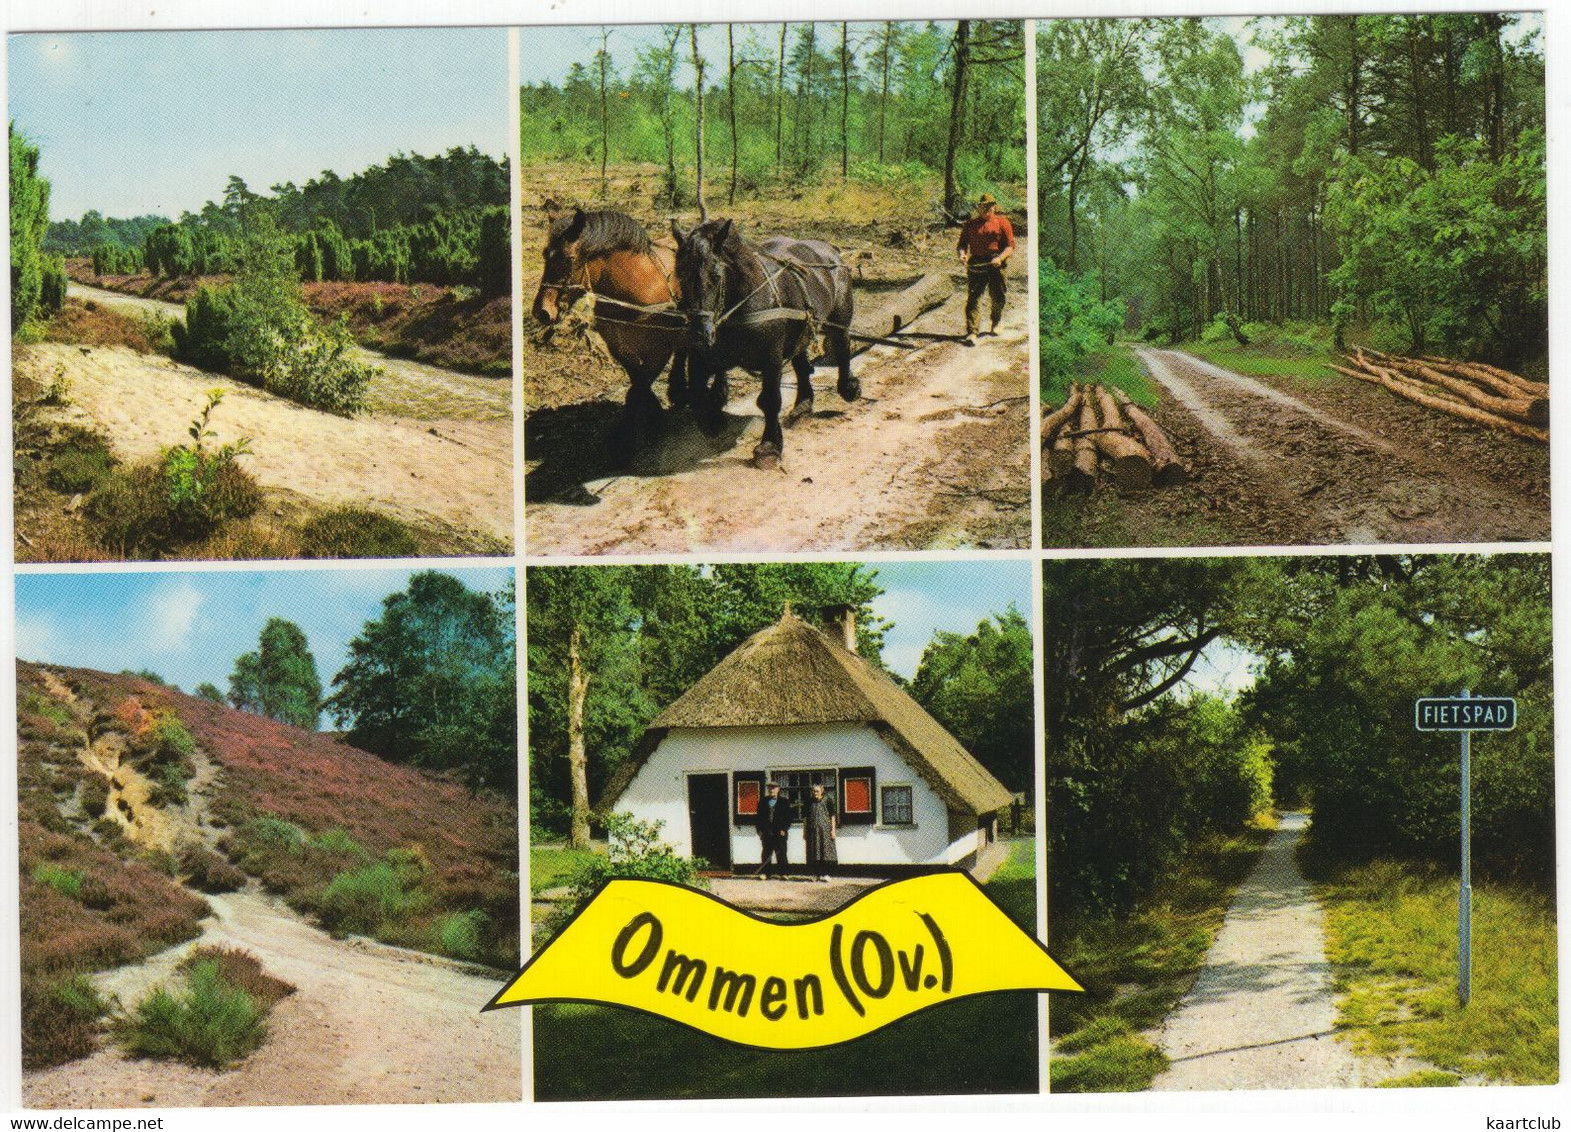 Ommen (Ov.) - (Overijssel, Nederland) - Nr. L 3362 - Natuur, Heide, Bosbouw - Ommen